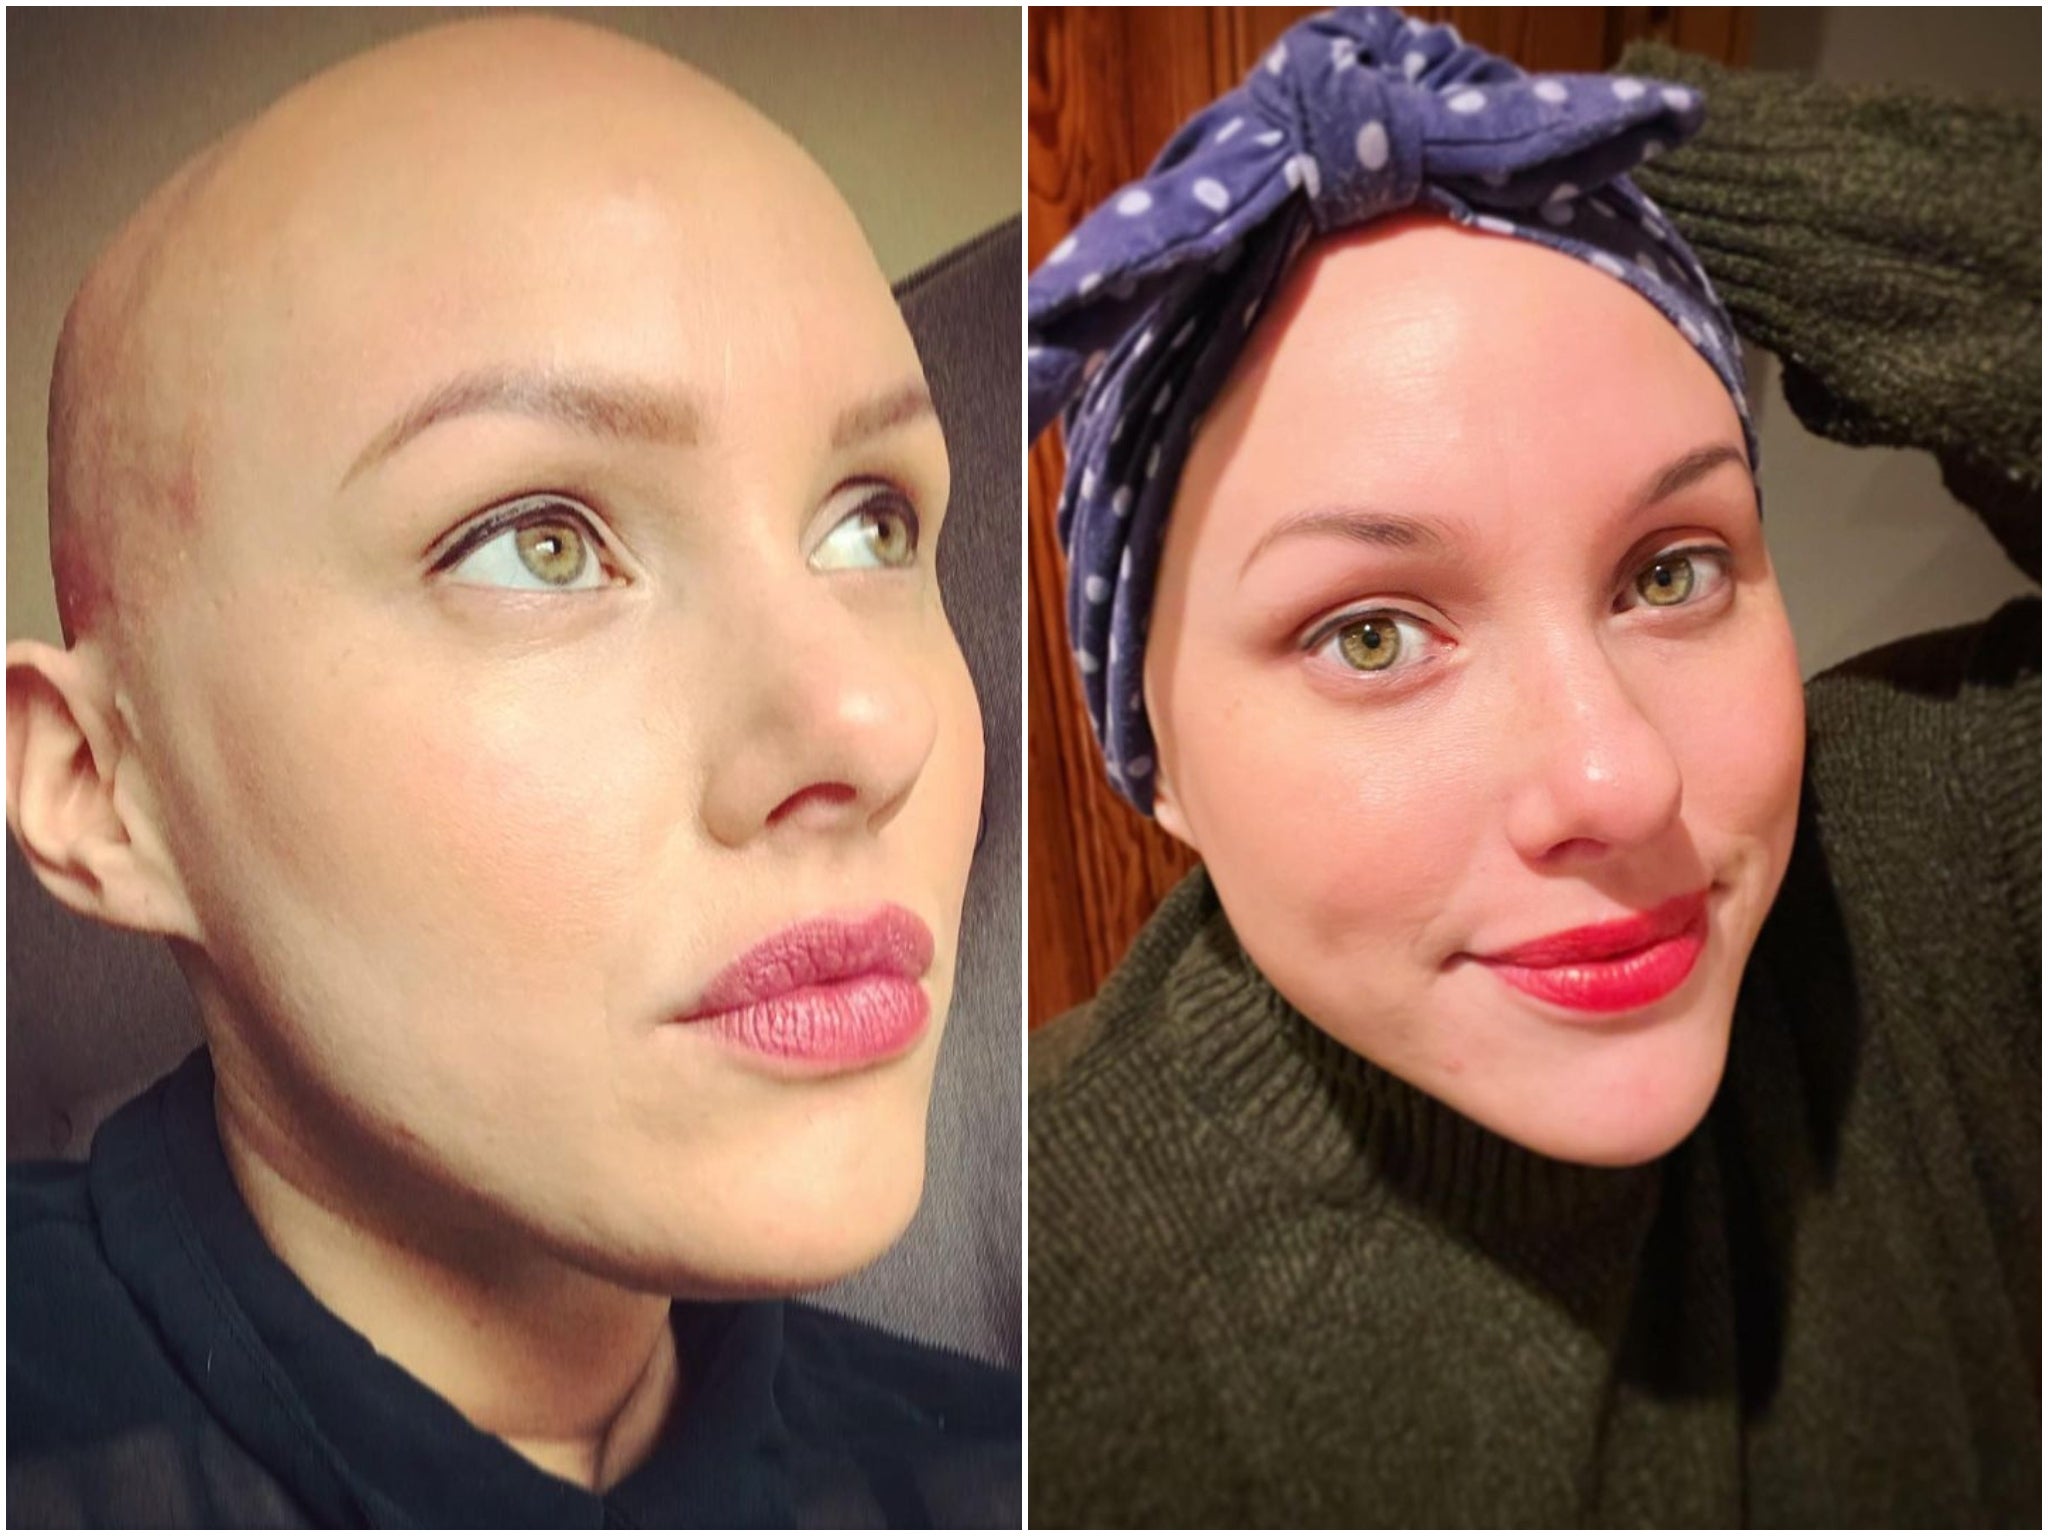 Laura Mathias, who campaigns for alopecia awareness